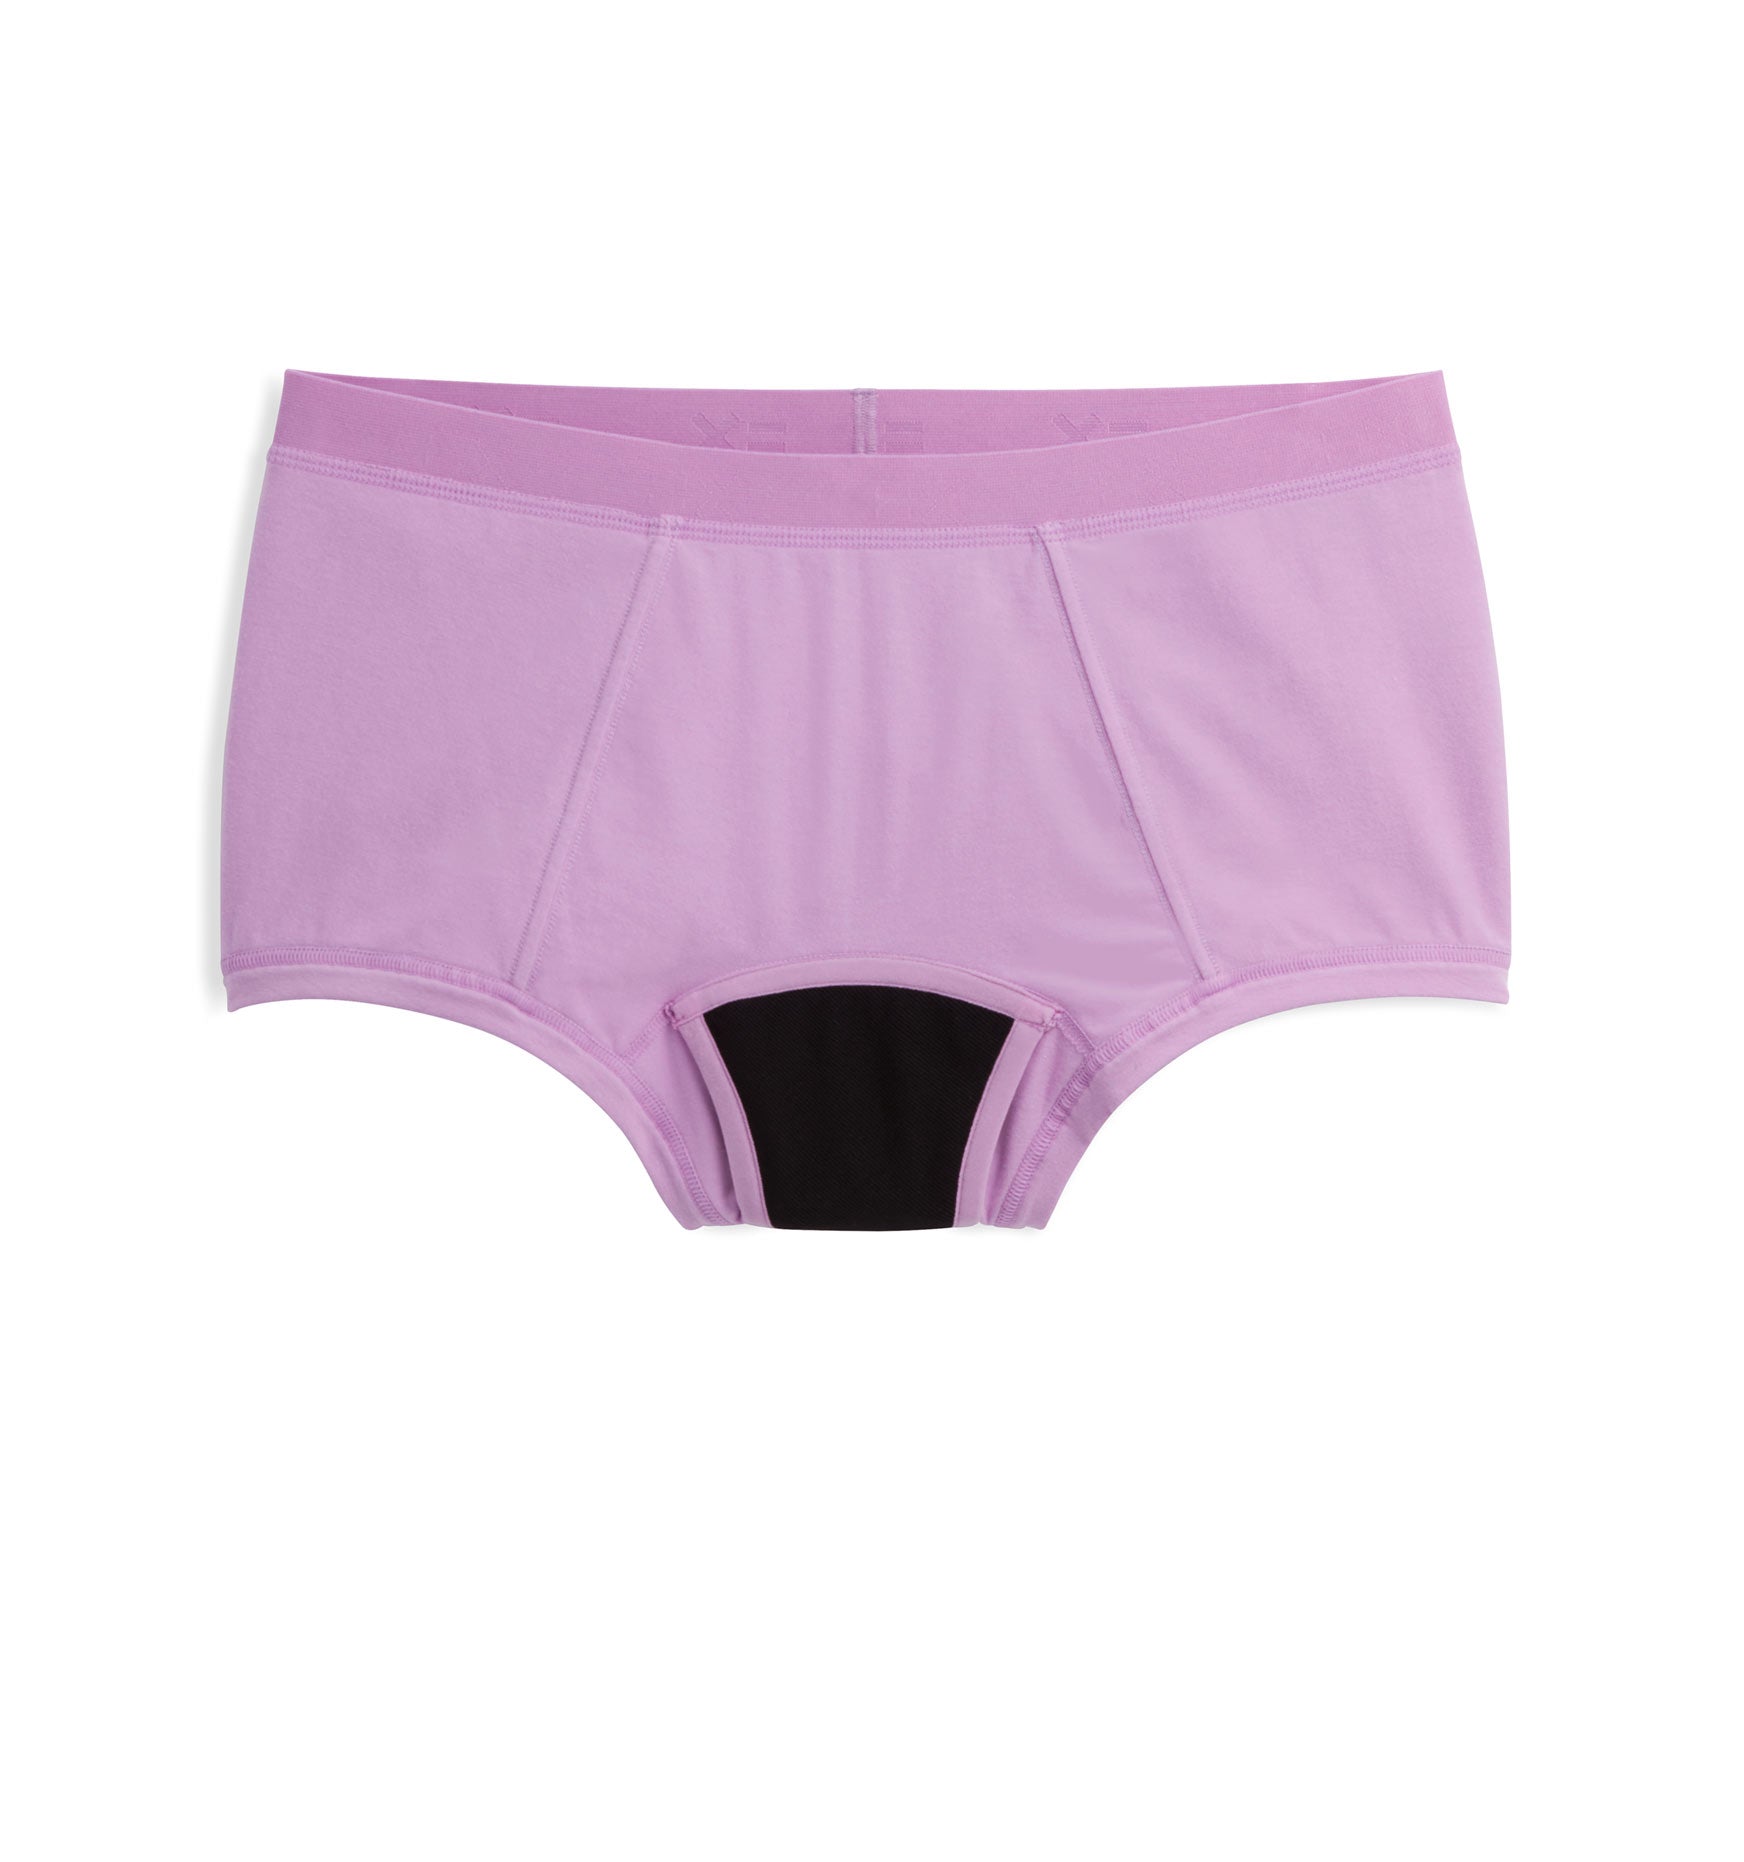 ZVZK Period Underwear Cotton Boxers Women Heavy flow Absorbent Boy Shorts  Pants Leak Proof Girl Panty Menstrual Panties Teen(S, Period Boxers Black)  at  Women's Clothing store